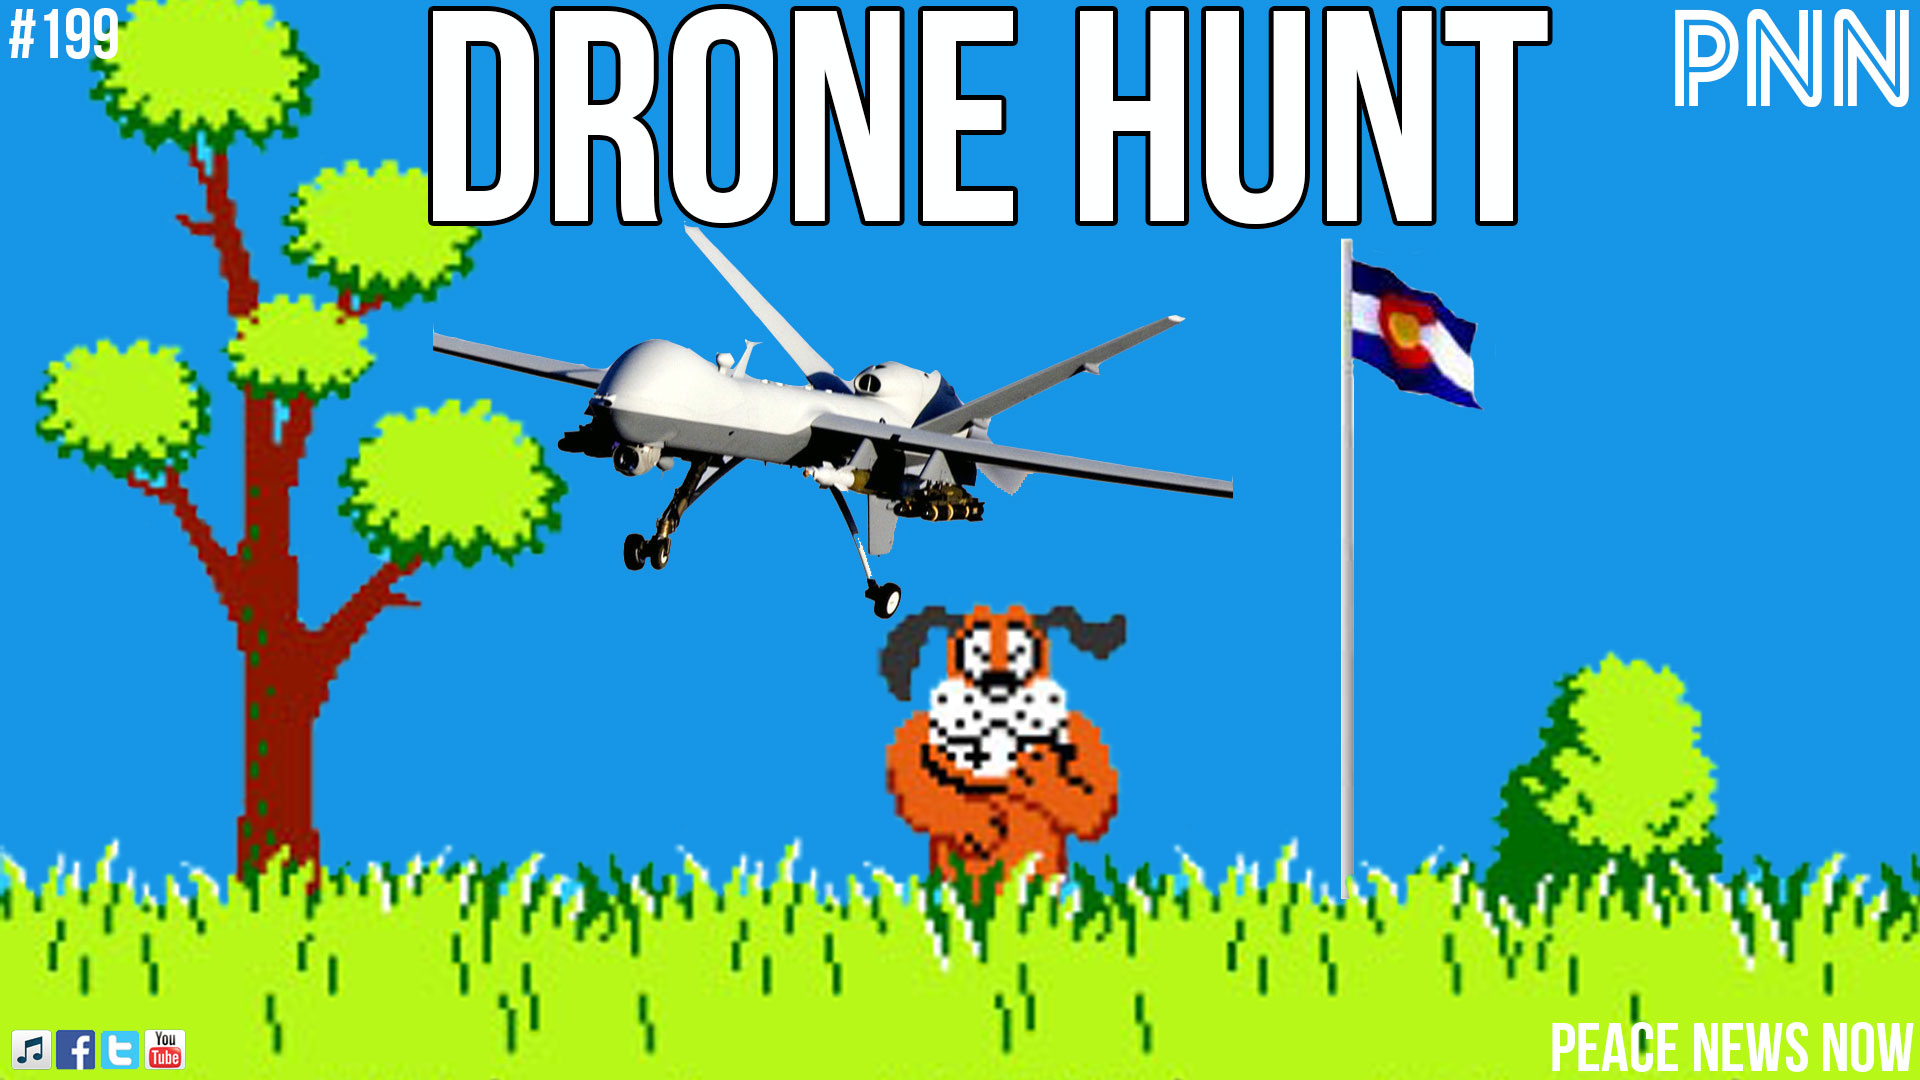 PNN-199-Drone-Hunt